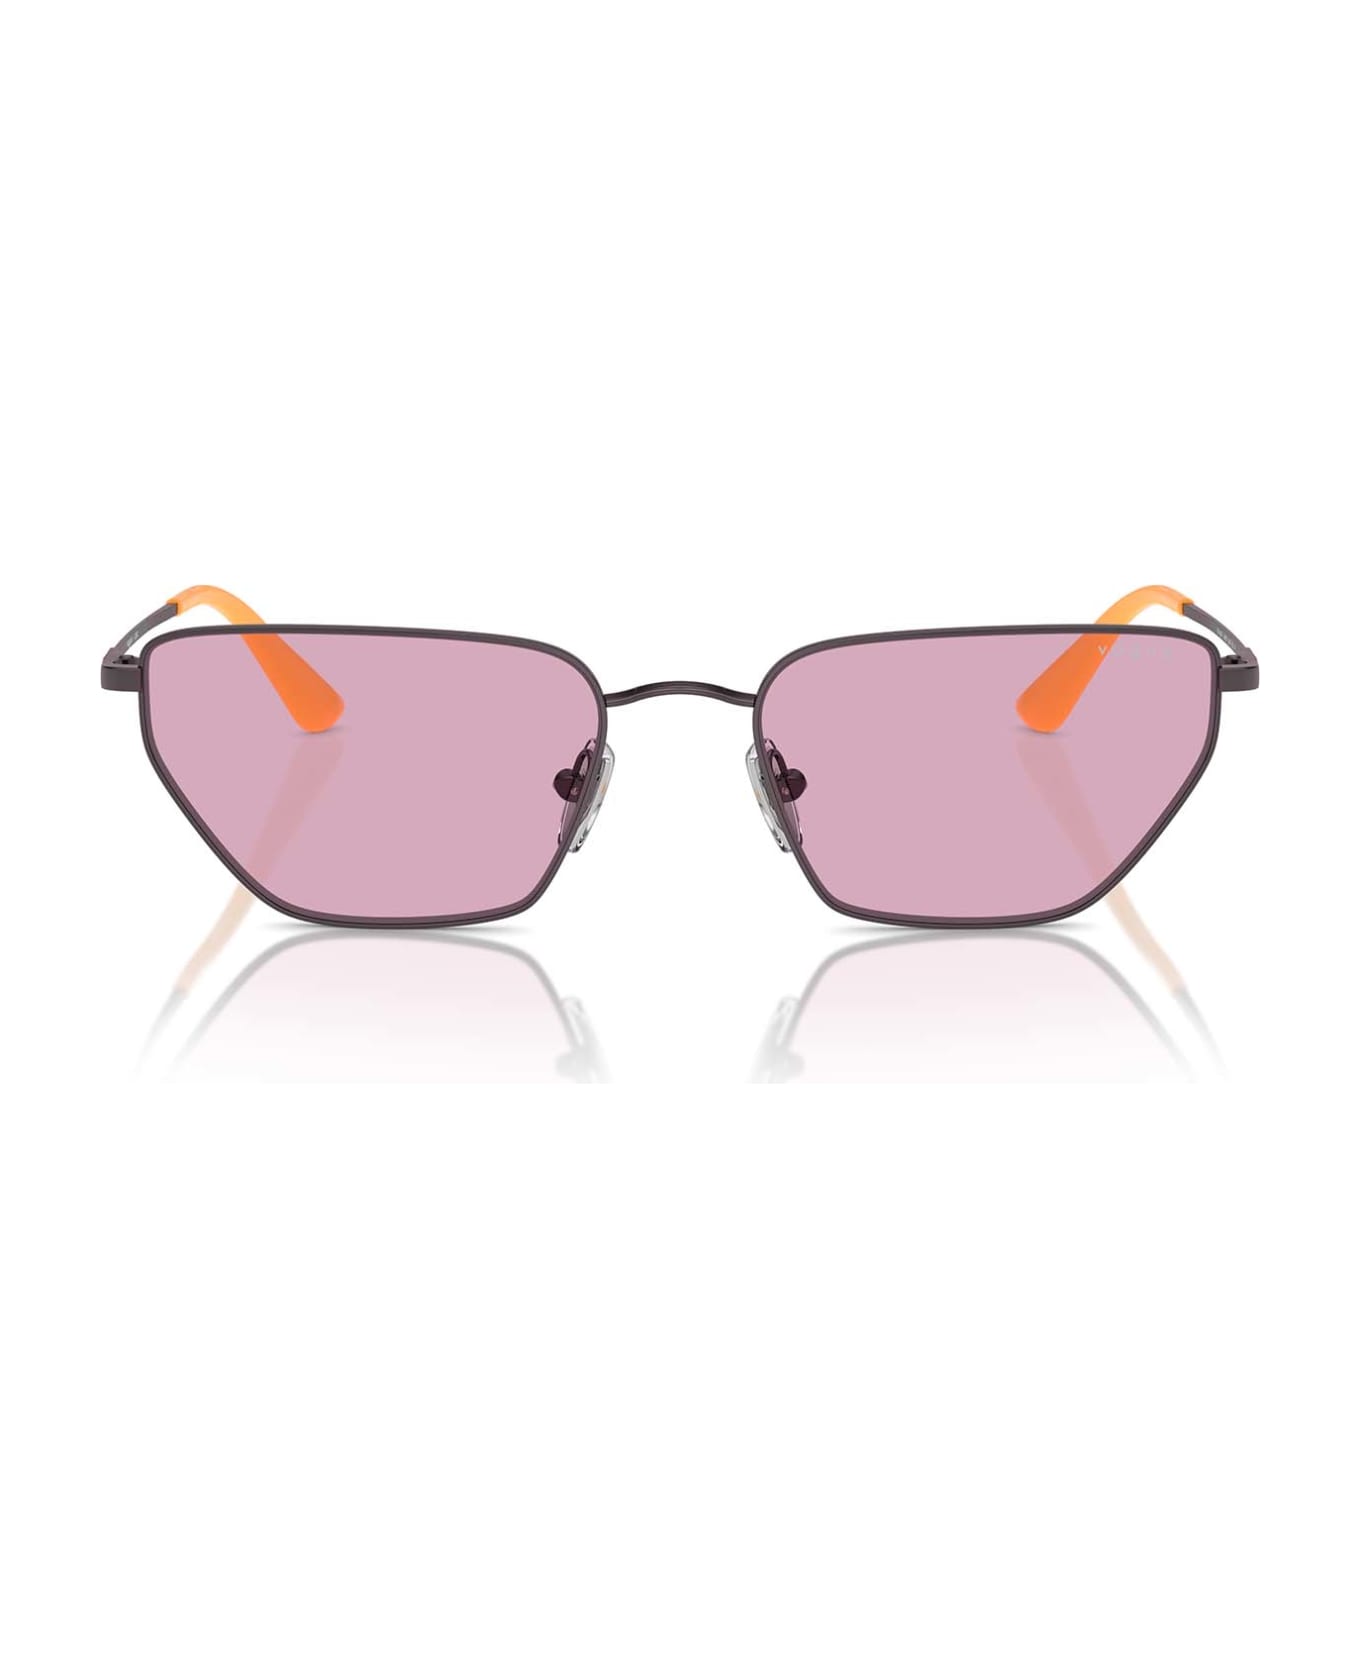 Vogue Eyewear Vo4316s Light Violet Sunglasses - Light Violet サングラス